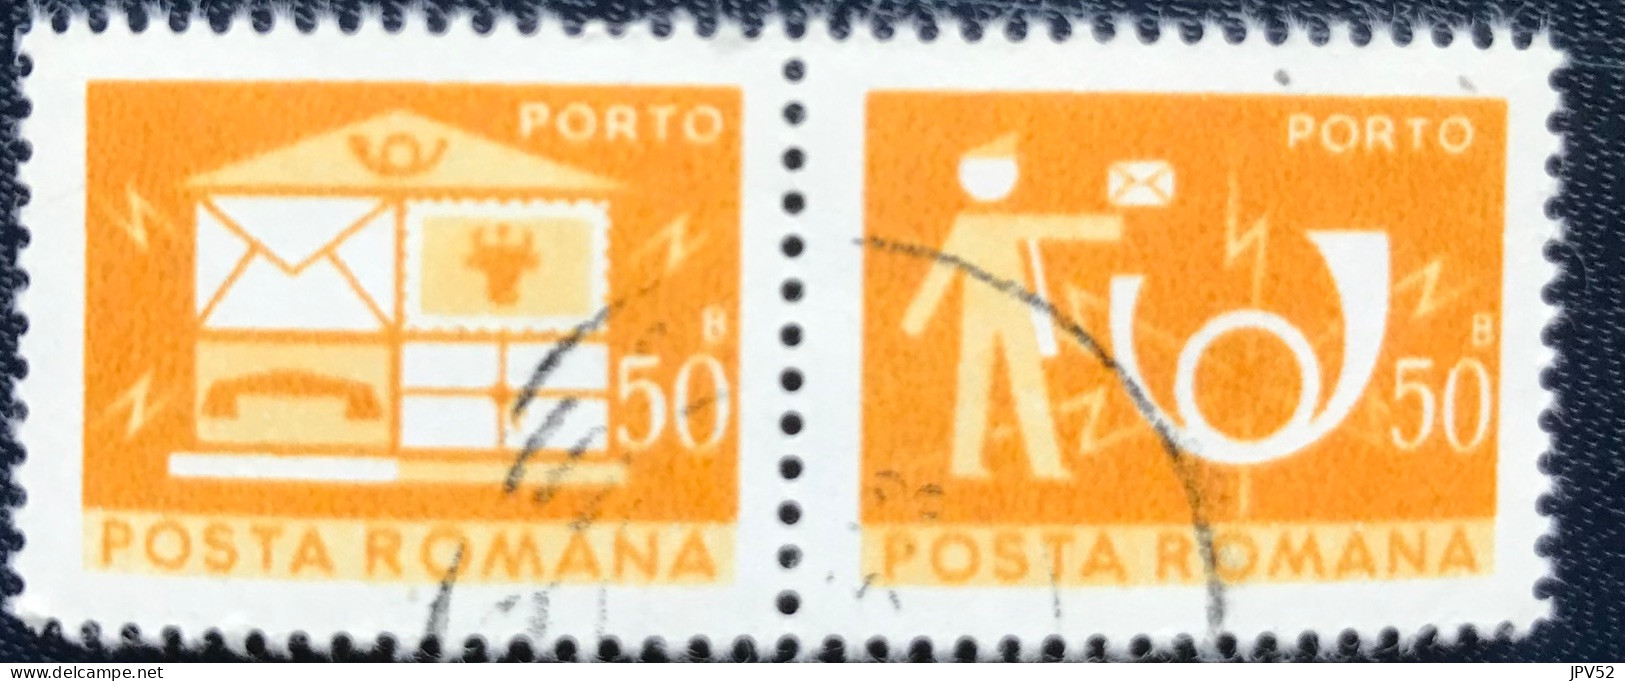 Romana - Roemenië - C14/55 - 1982 - (°)used - Michel 126 - Brievenbus & Postbode & Posthoorn - Strafport